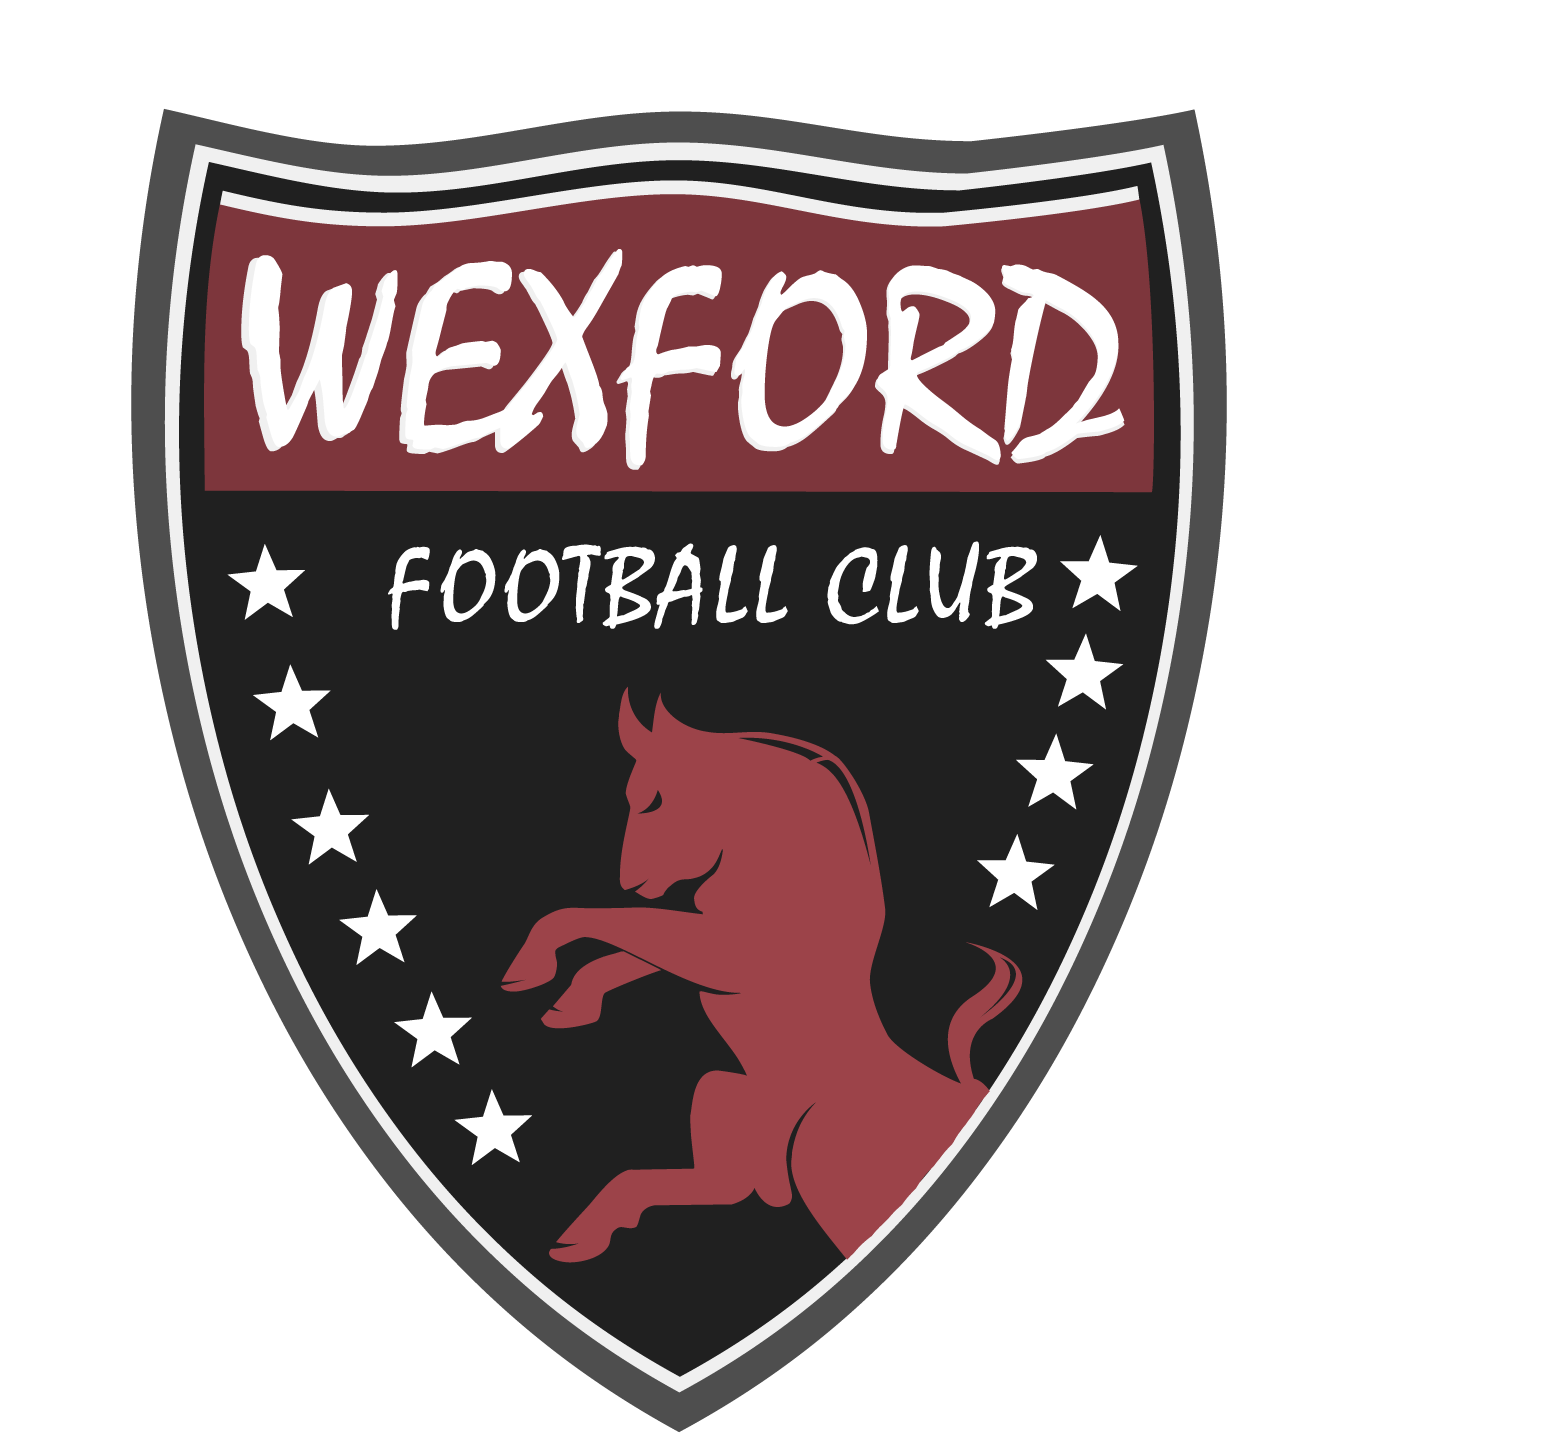 Wexford Youths logo